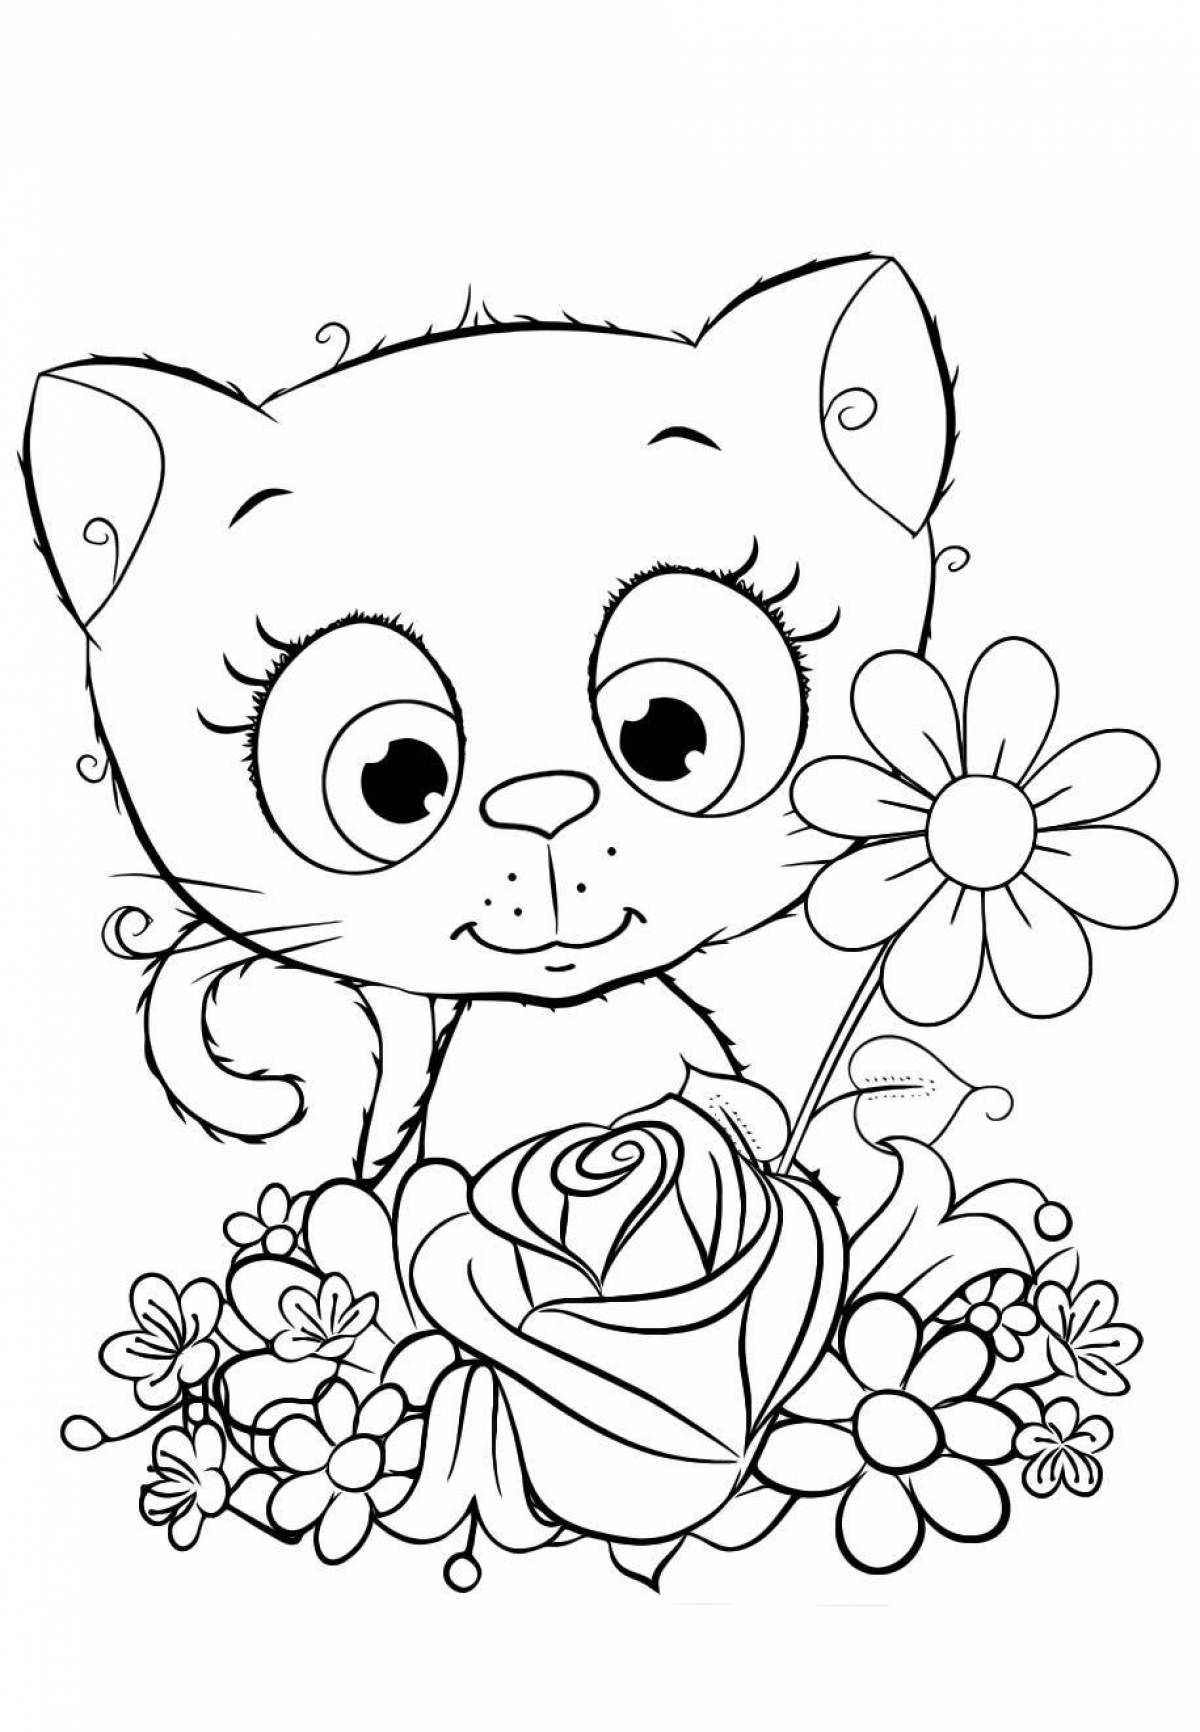 Elegant cat with flowers